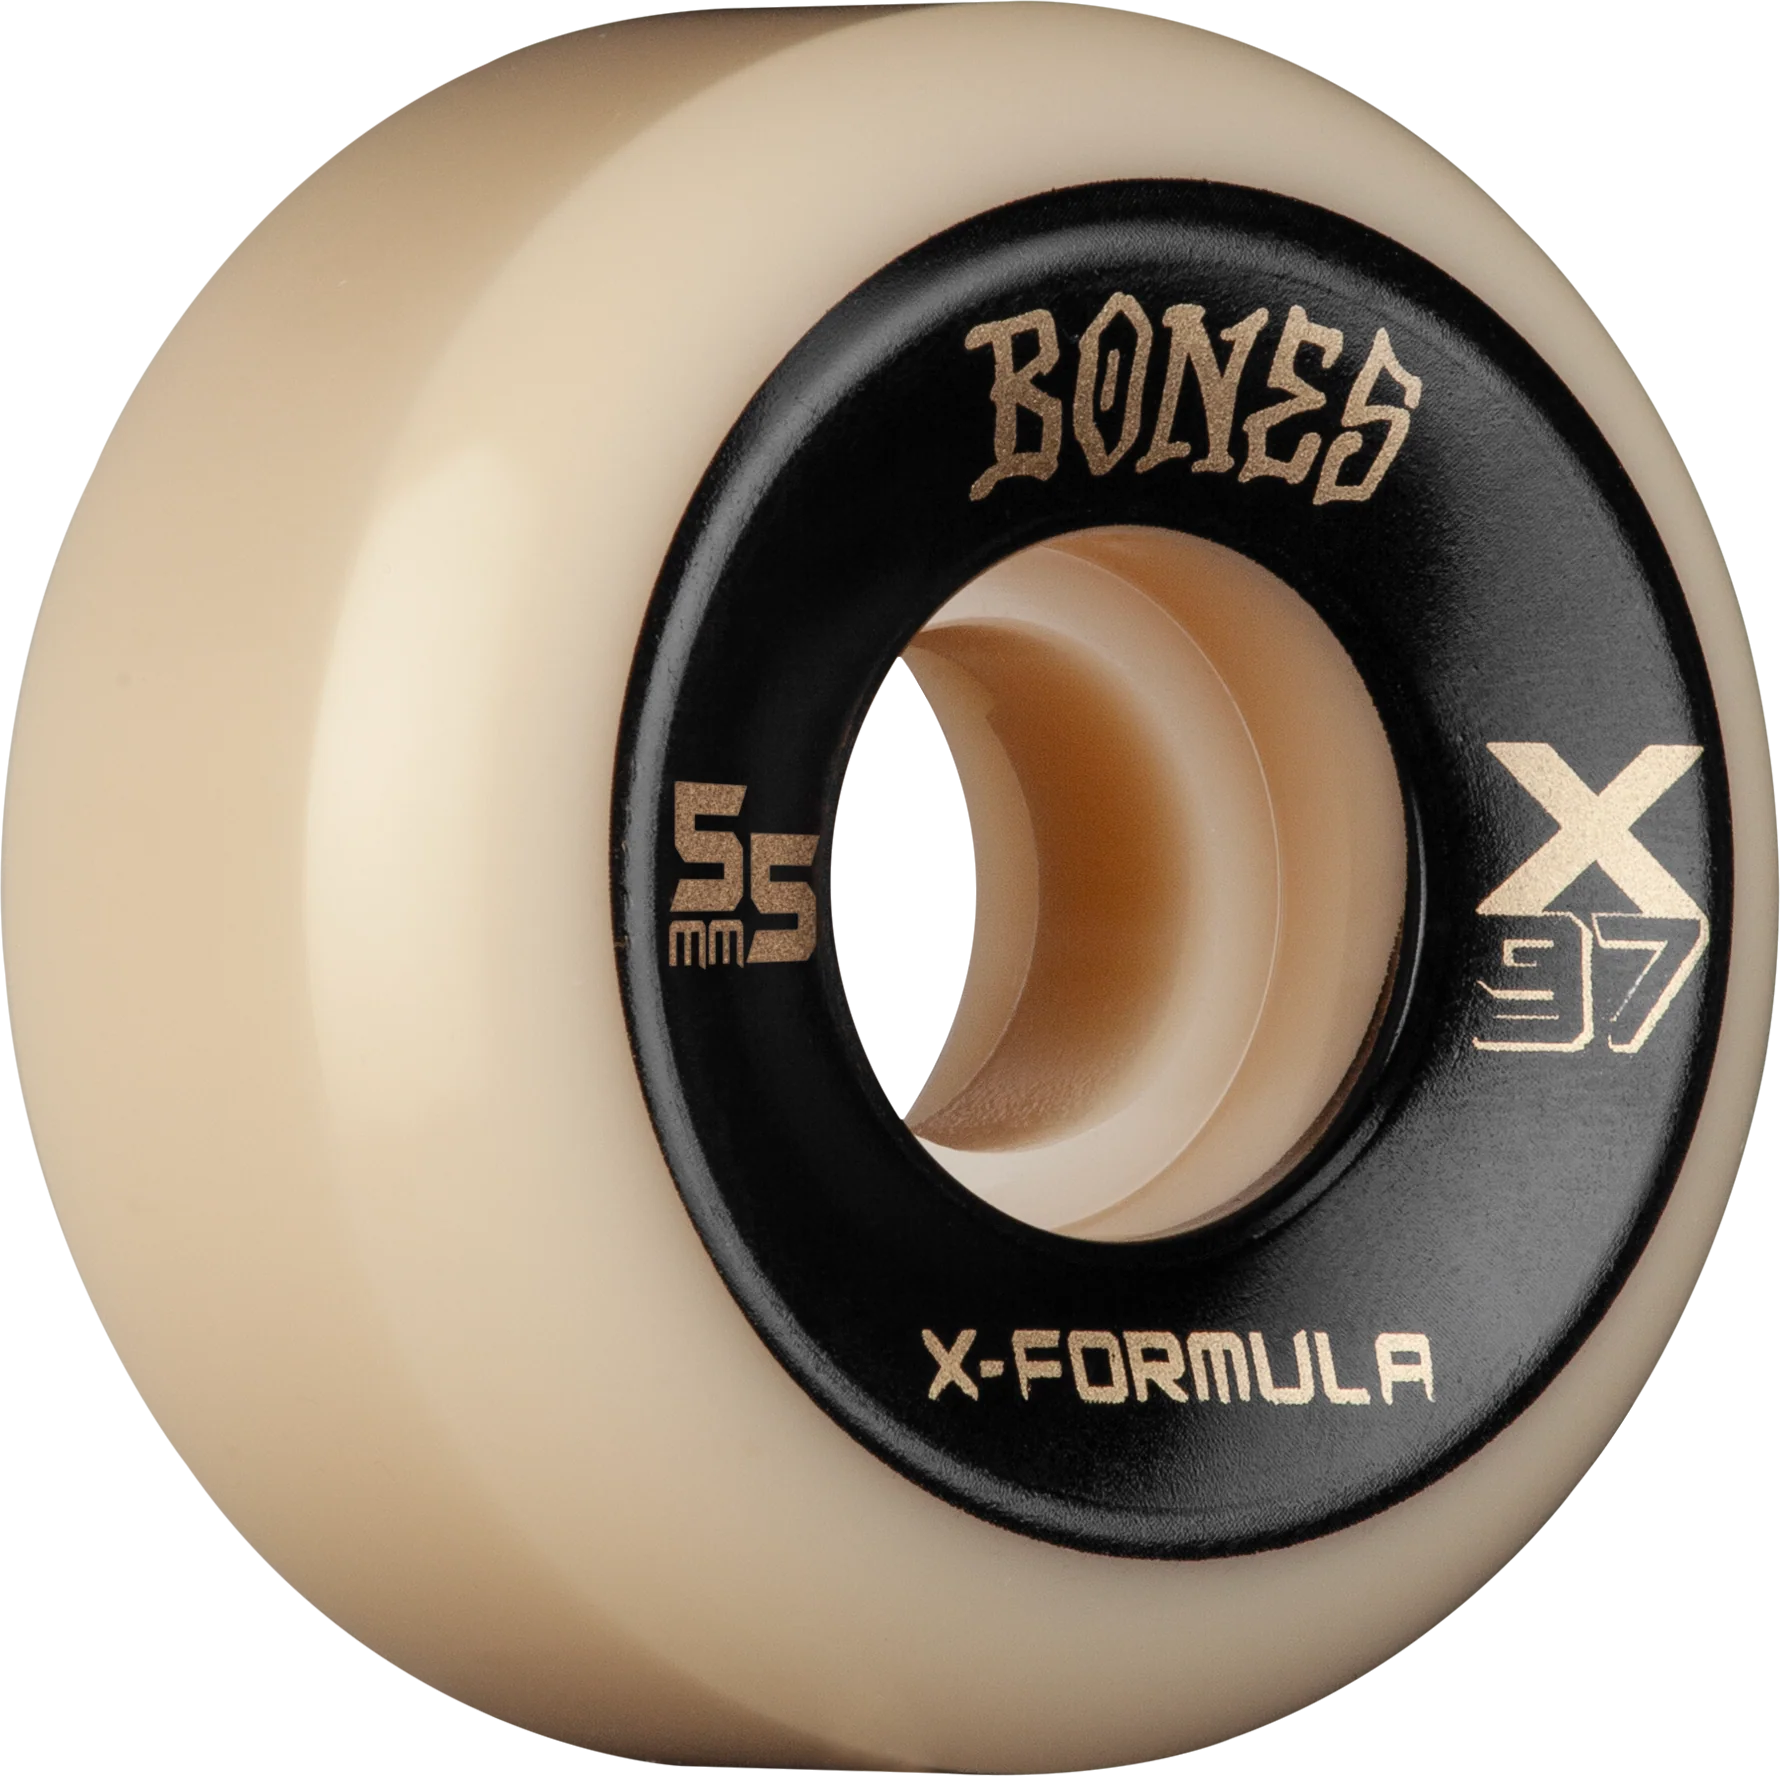 BONES - X FORMULA SUDECUT 55mm 97a V5